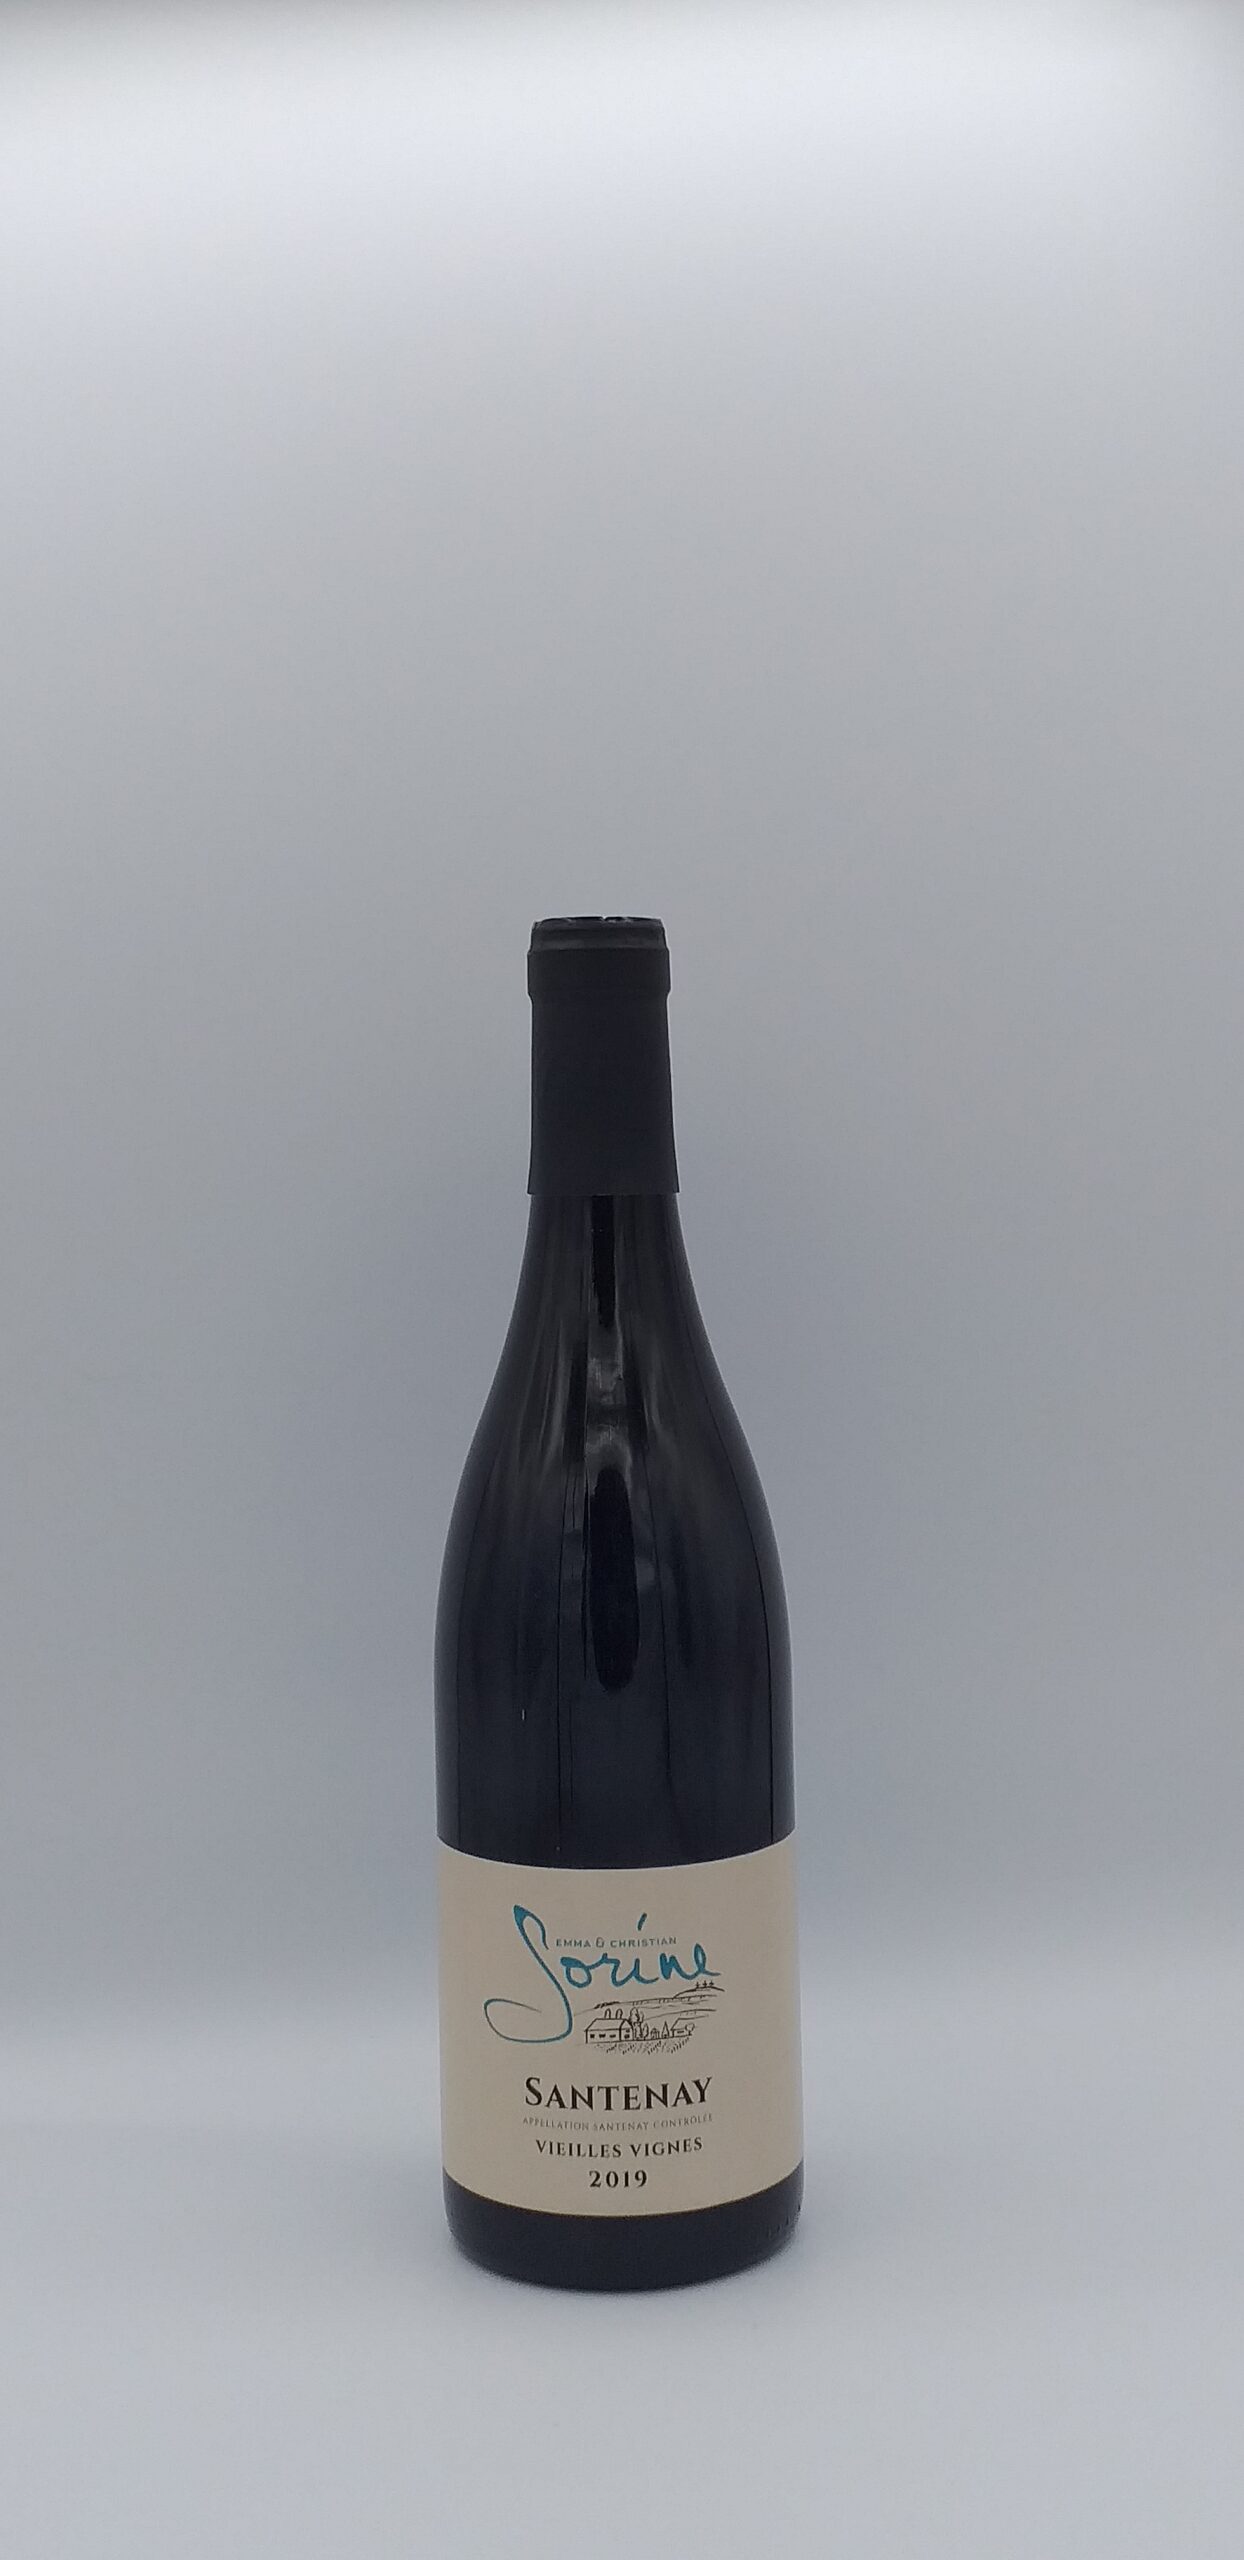 Bourgogne Santenay “Vieilles Vignes” 2019 Domaine Sorine